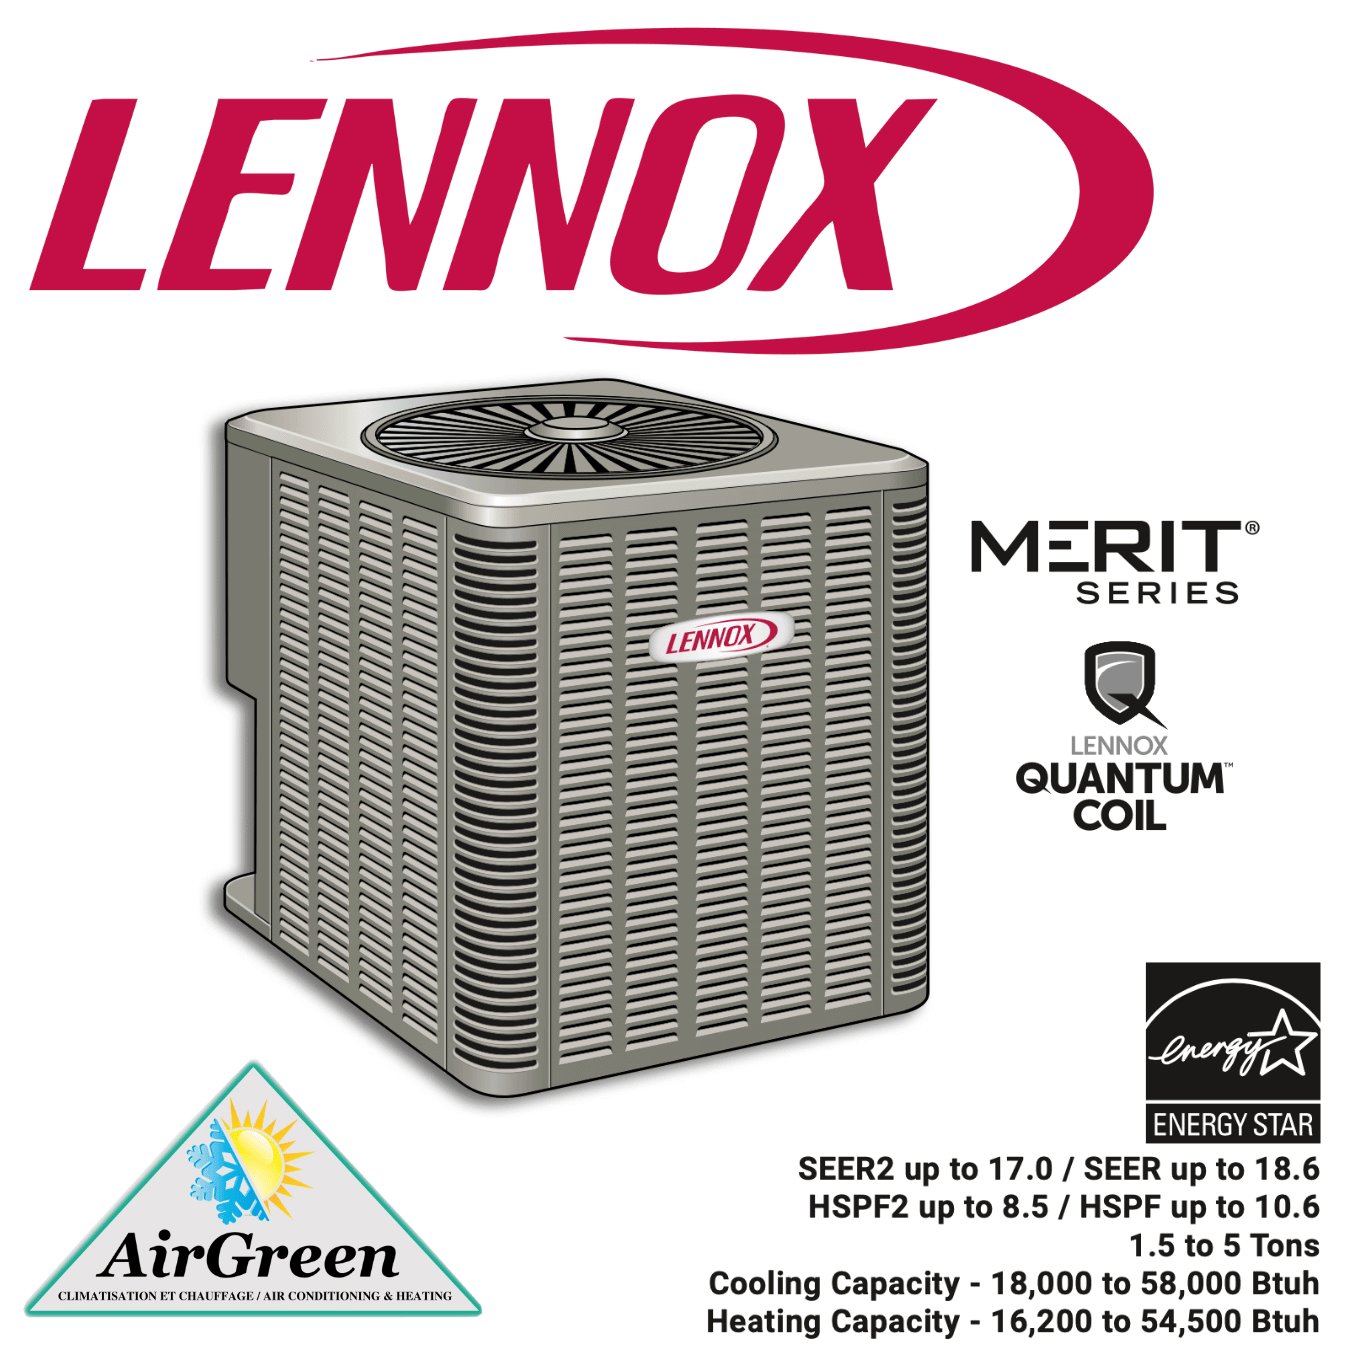 Thermopompe Centrale LENNOX MERIT ML17XP1 3.5 Tonnes spec sheet with relevant information